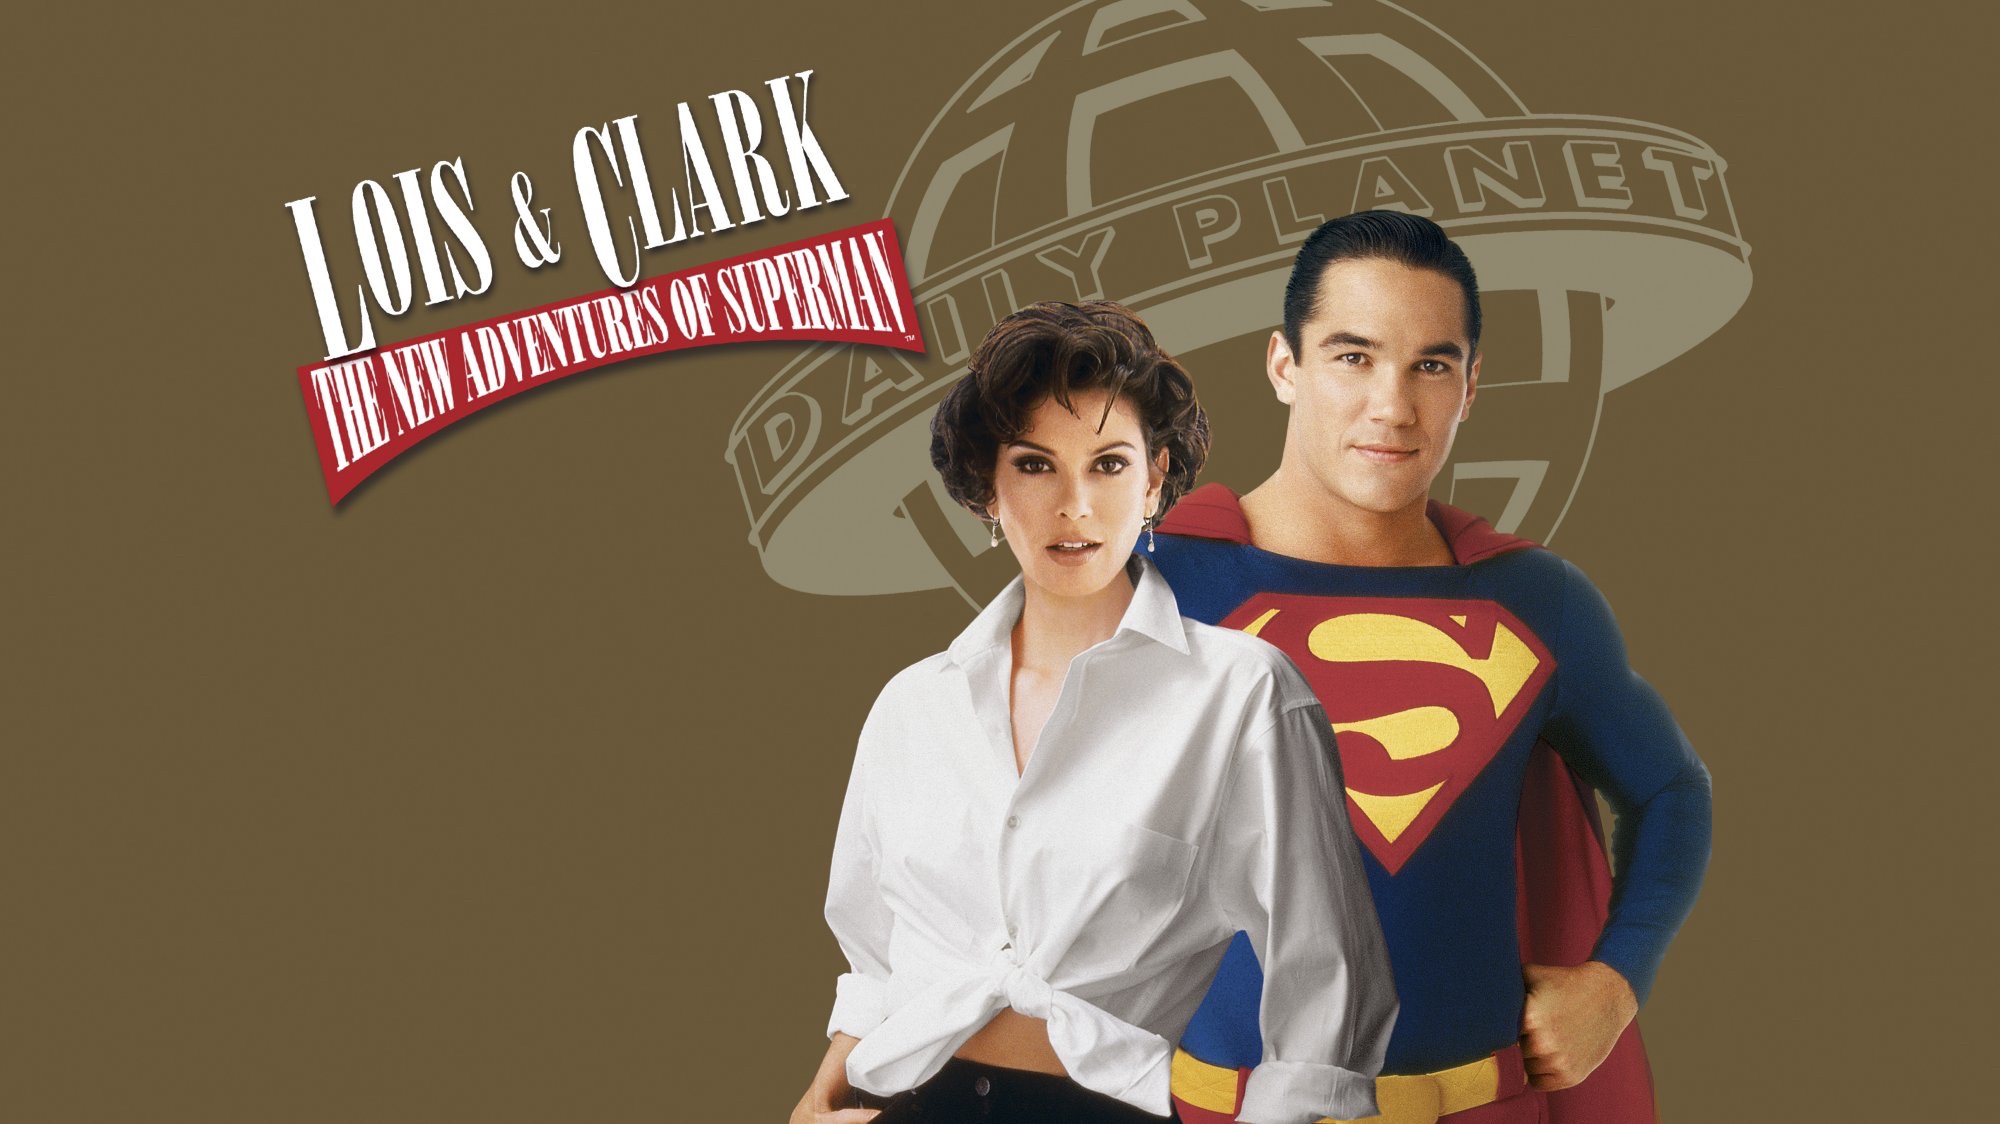 Lois & Clark: The New Adventures of Superman HD Wallpaper